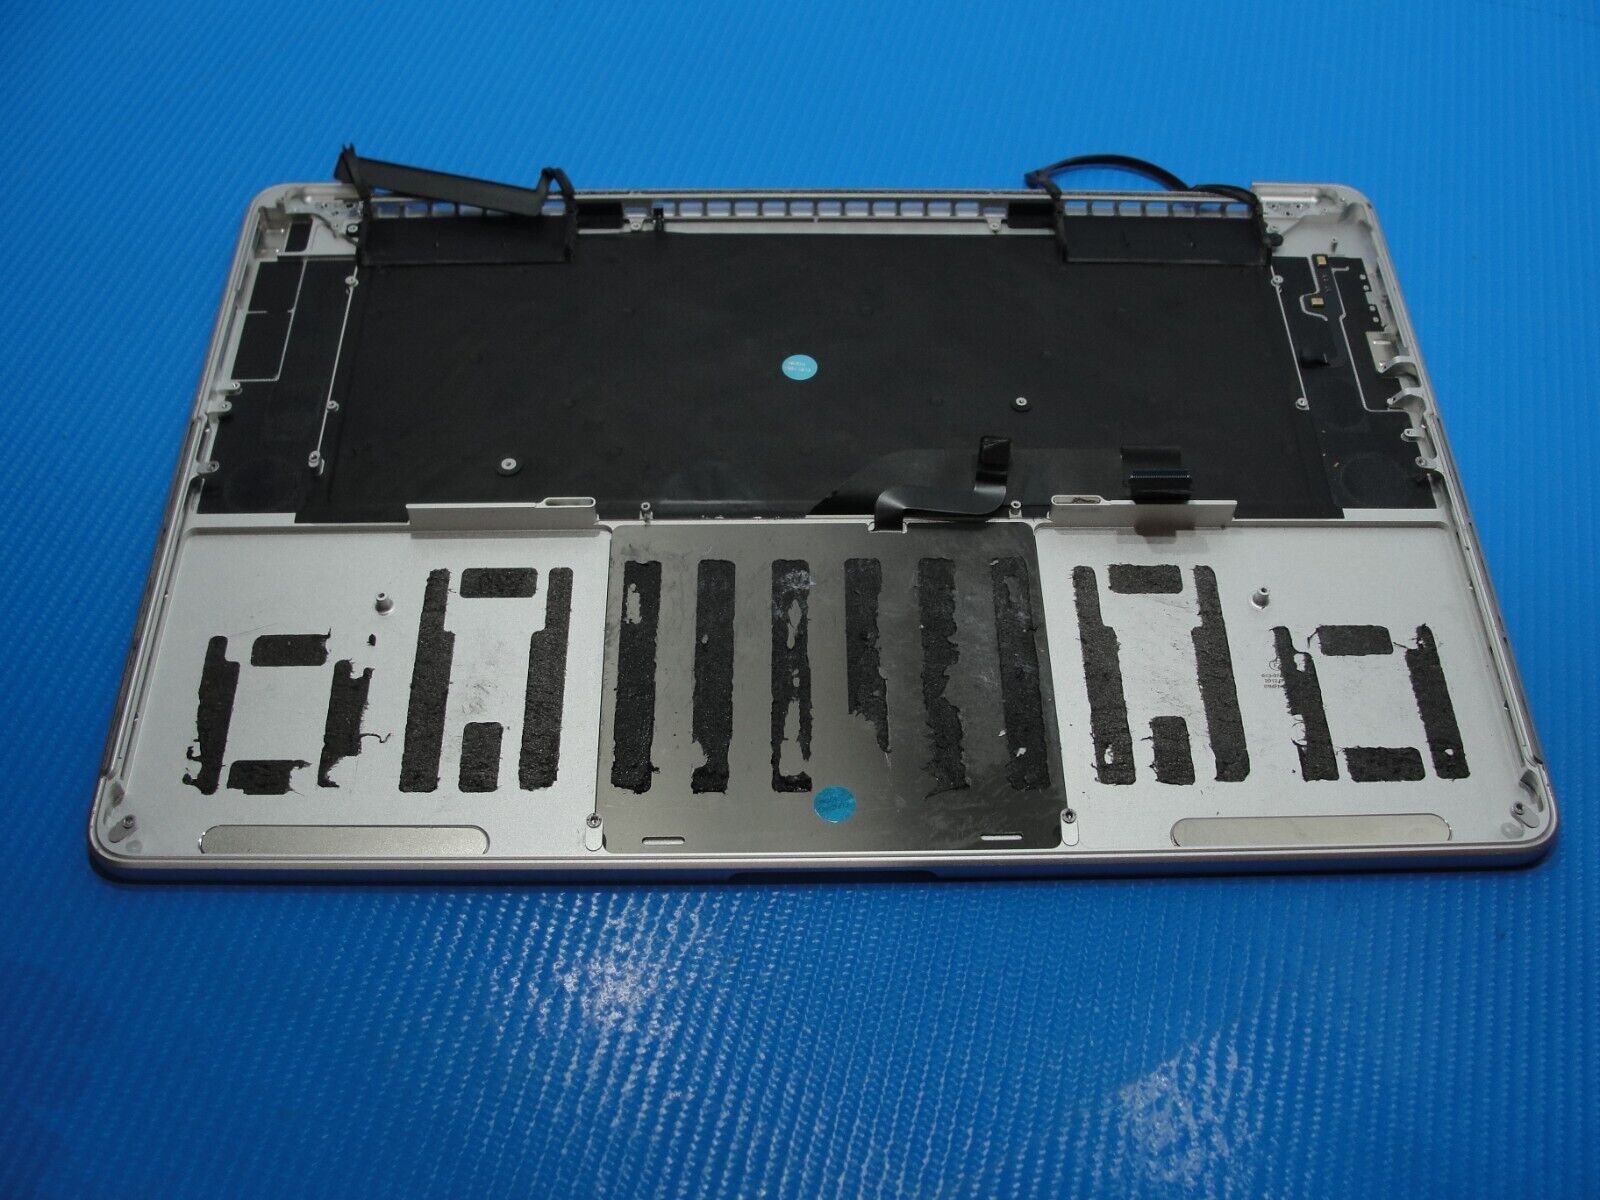 MacBook Pro A1398 15 2012 MC975LL/A Top Case w/Keyboard Trackpad Silver 661-6532